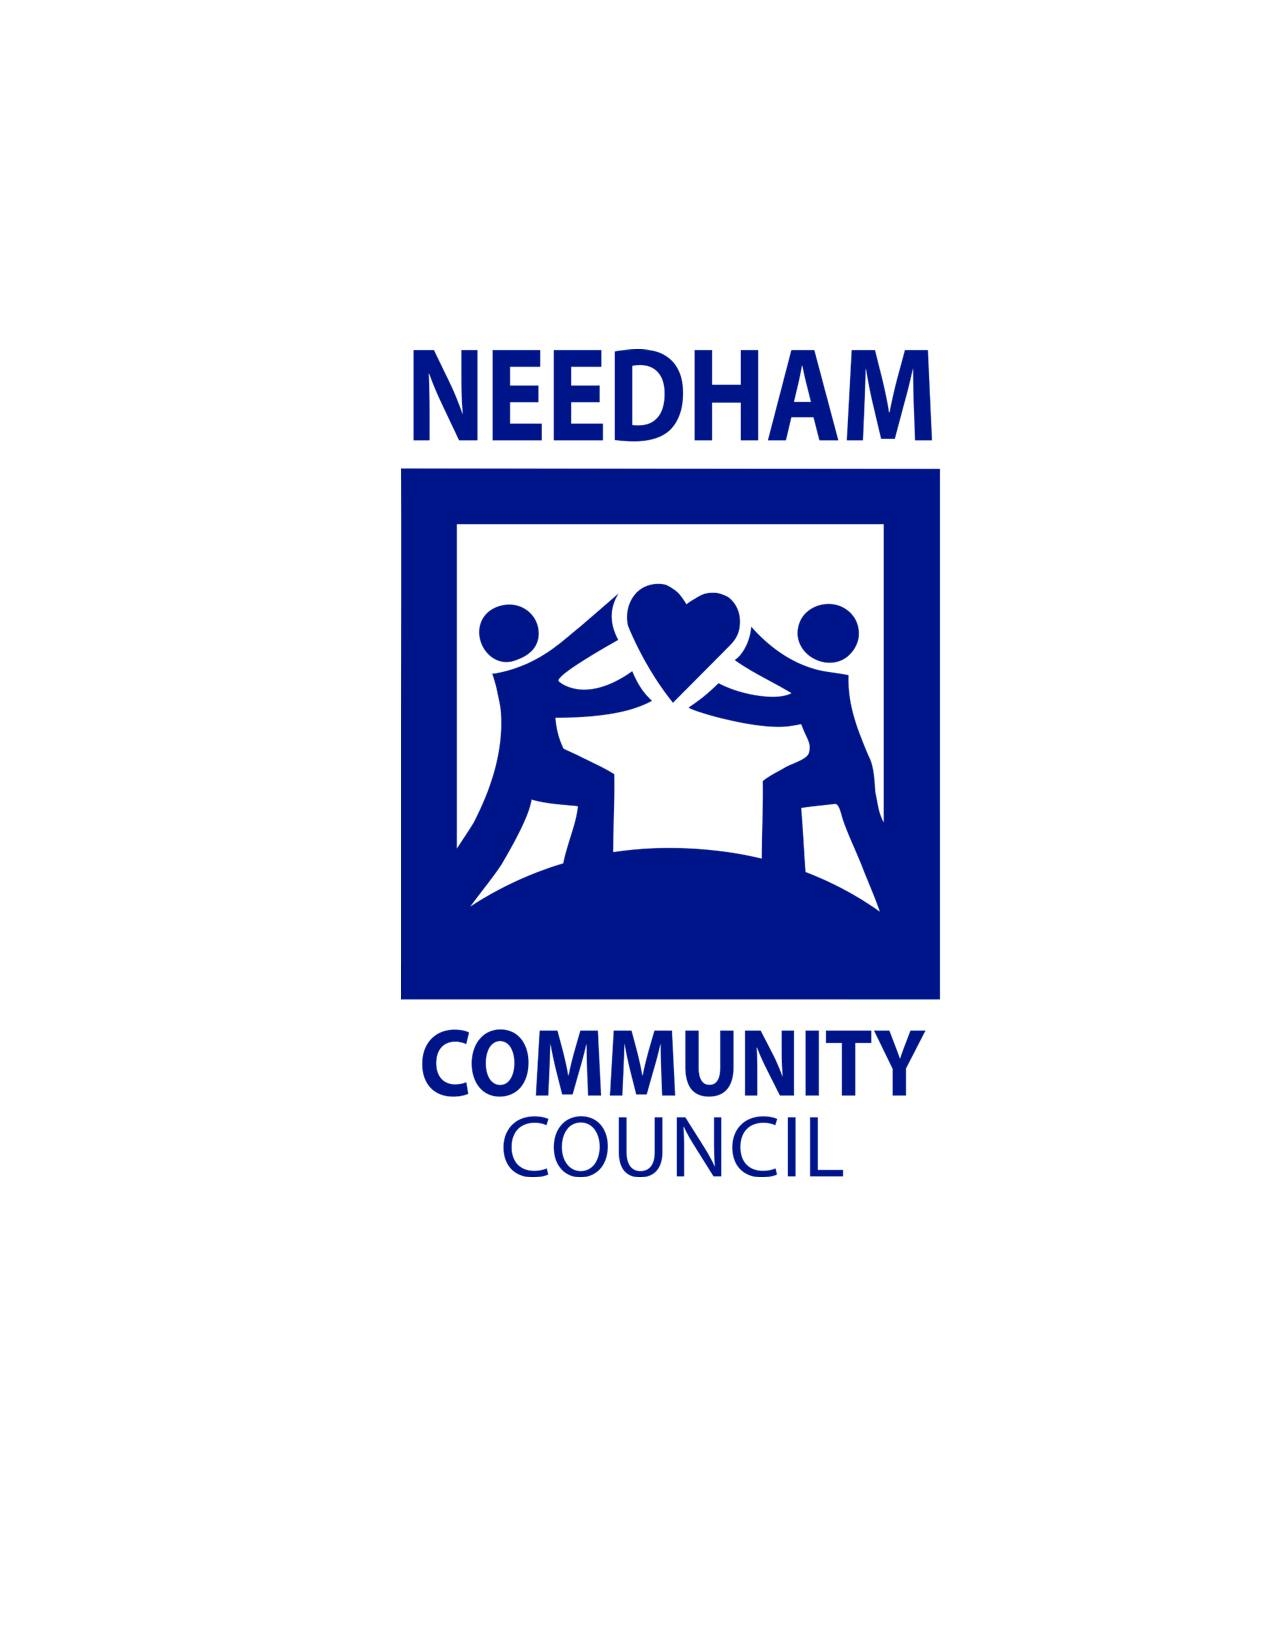 Needham Community Council Food Pantry